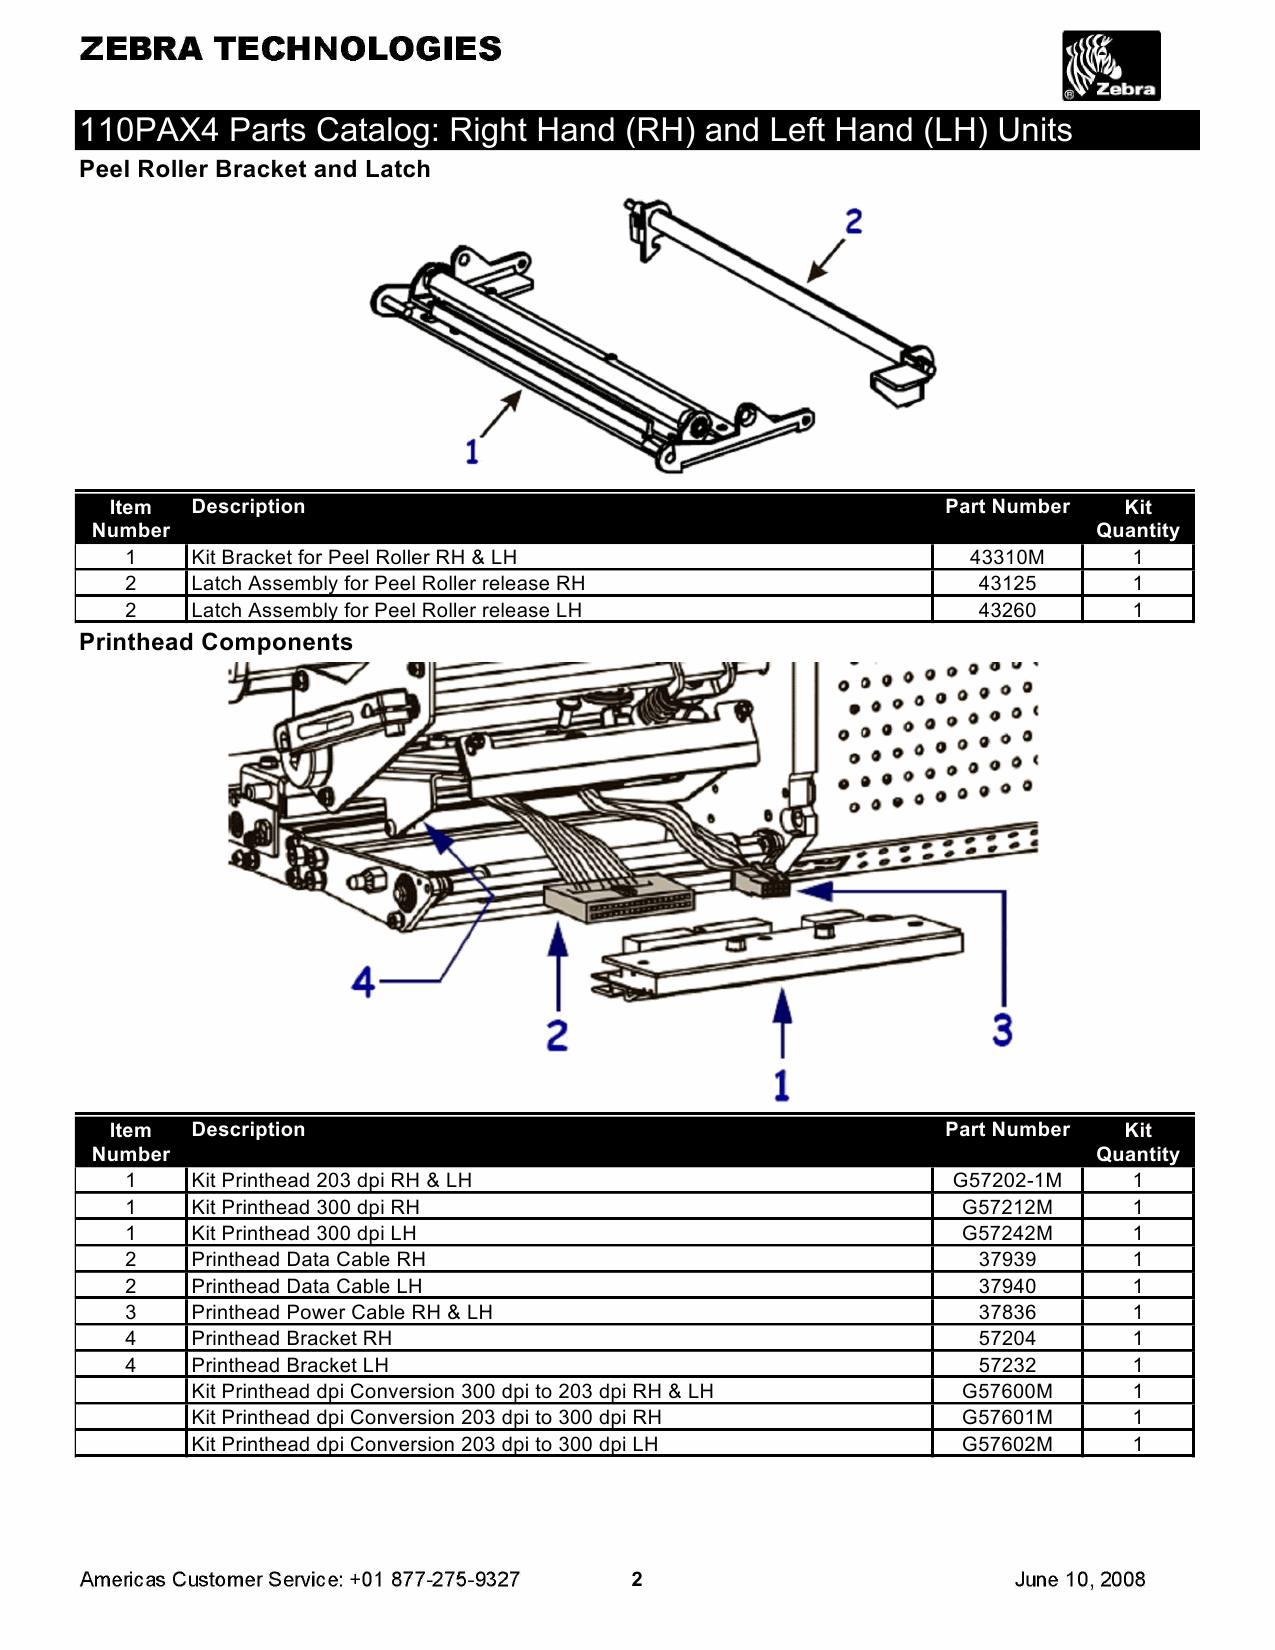 Zebra Label 110PAX4 Parts Catalog-2